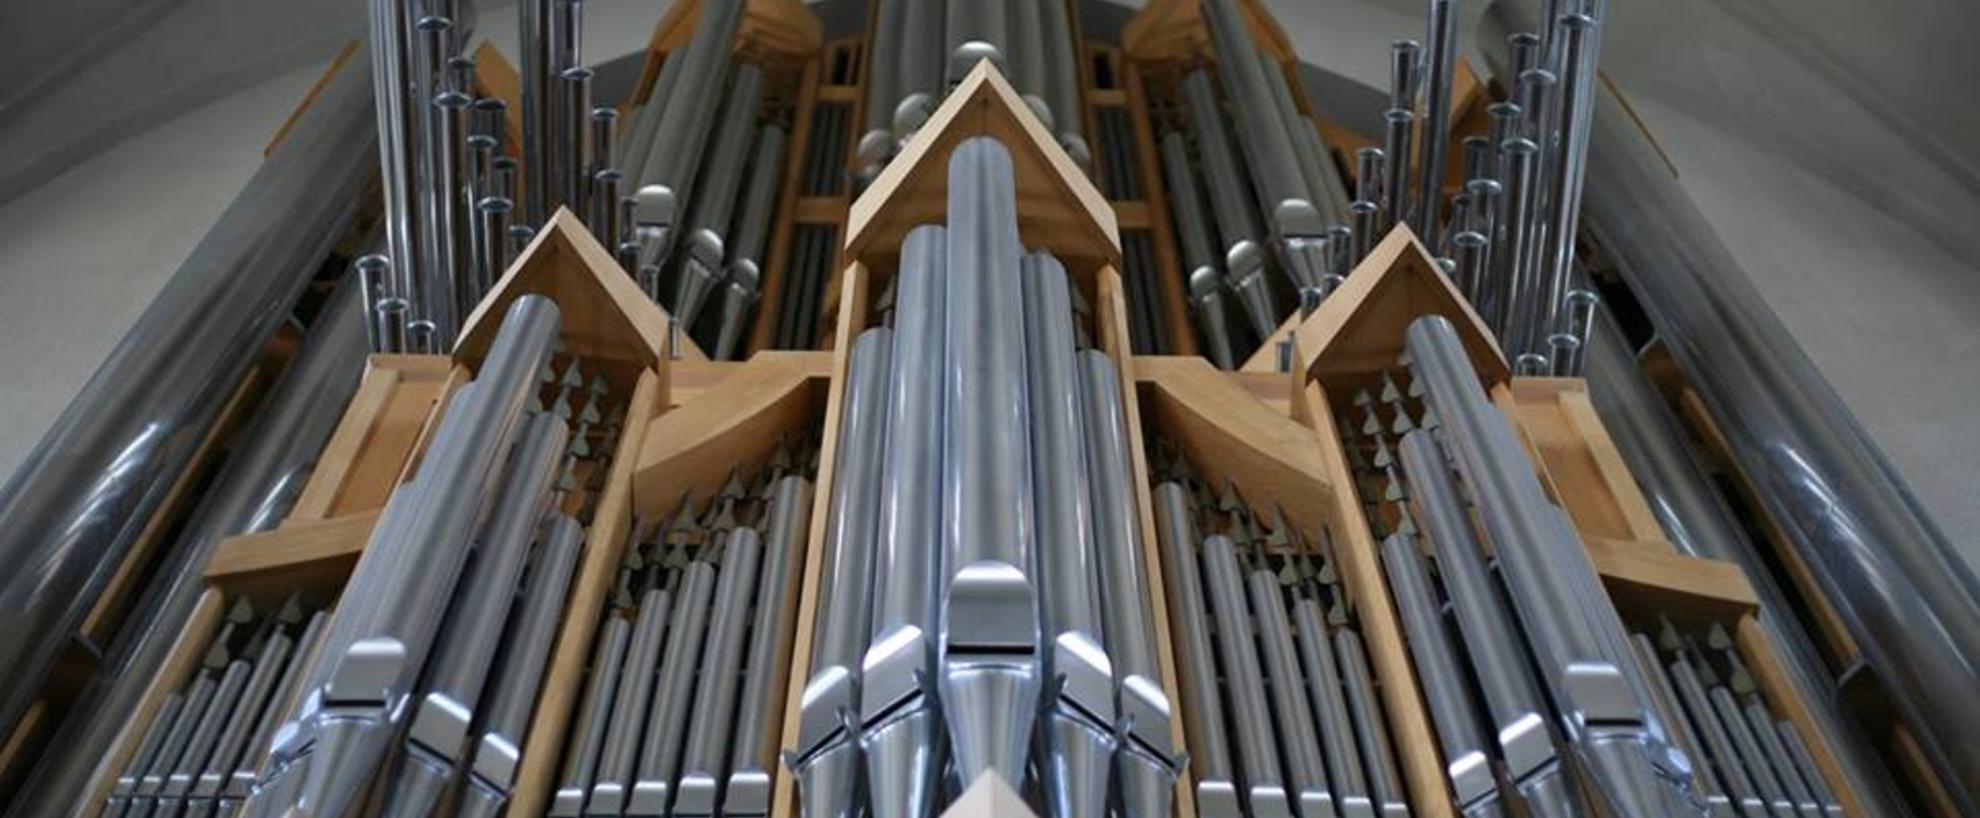 A picture of the Klais Organ at Hallgrimskirkja